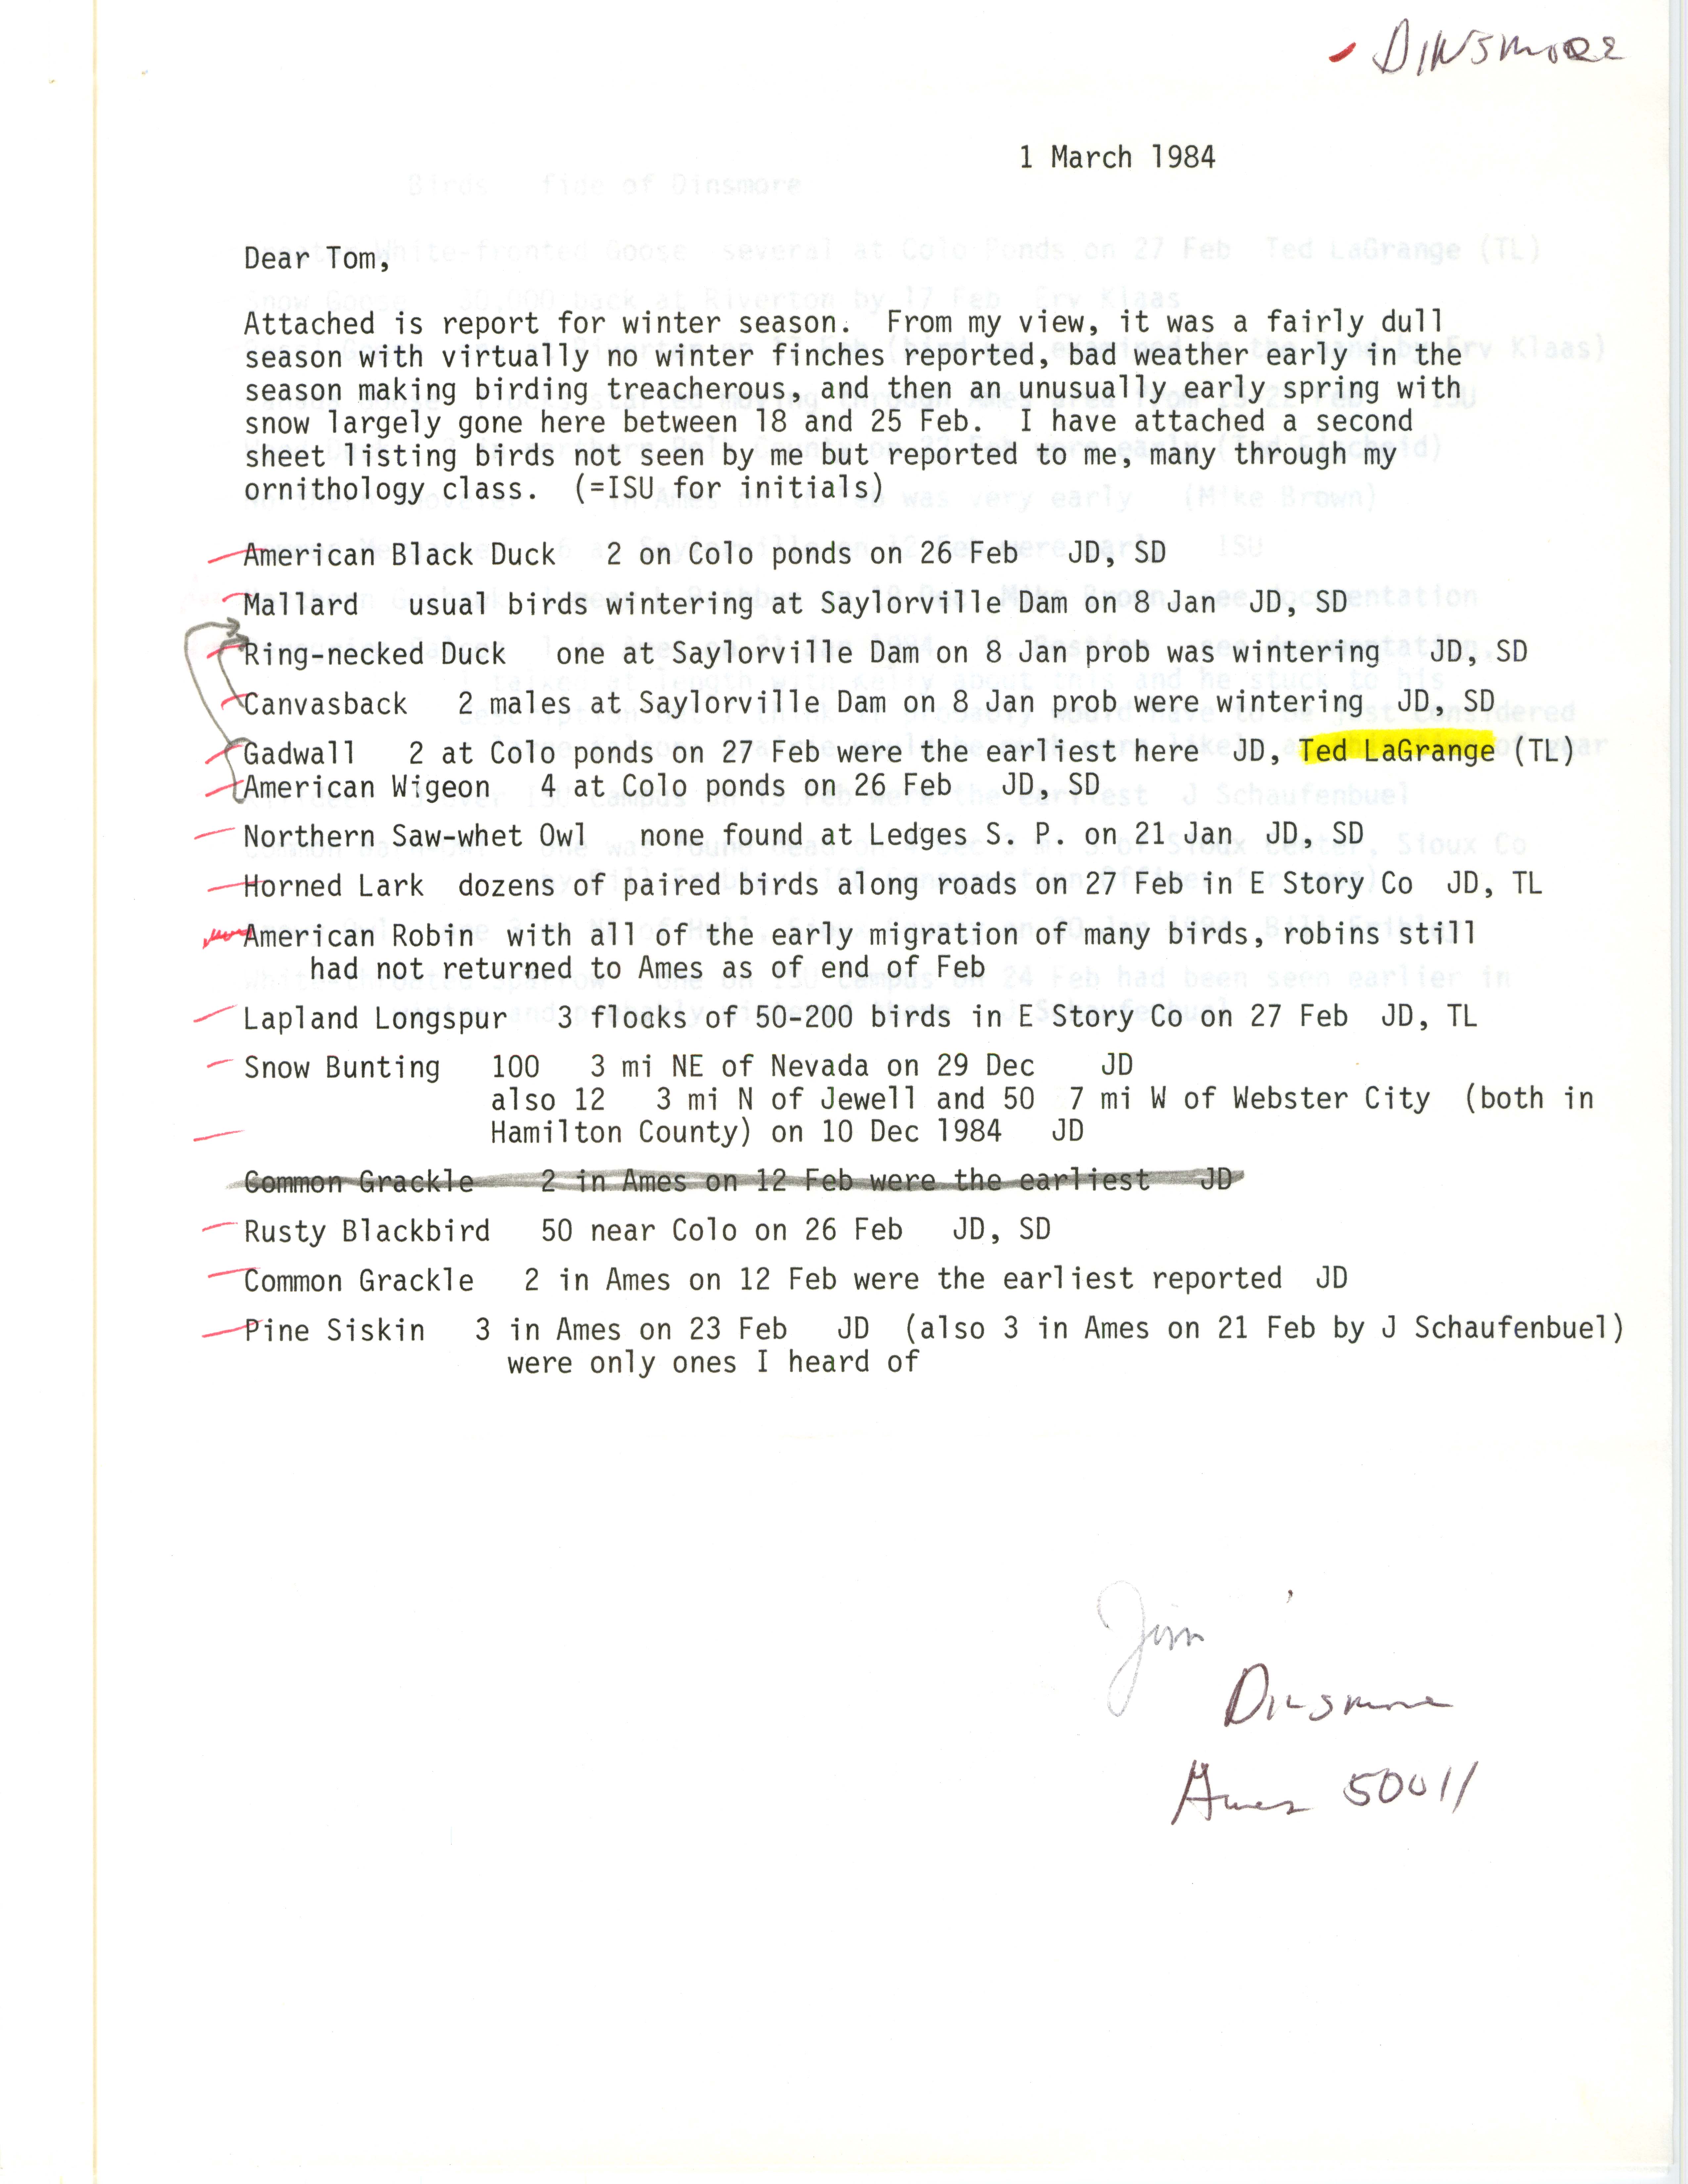 James J. Dinsmore letter to Thomas H. Kent regarding winter bird sightings, March 1, 1984